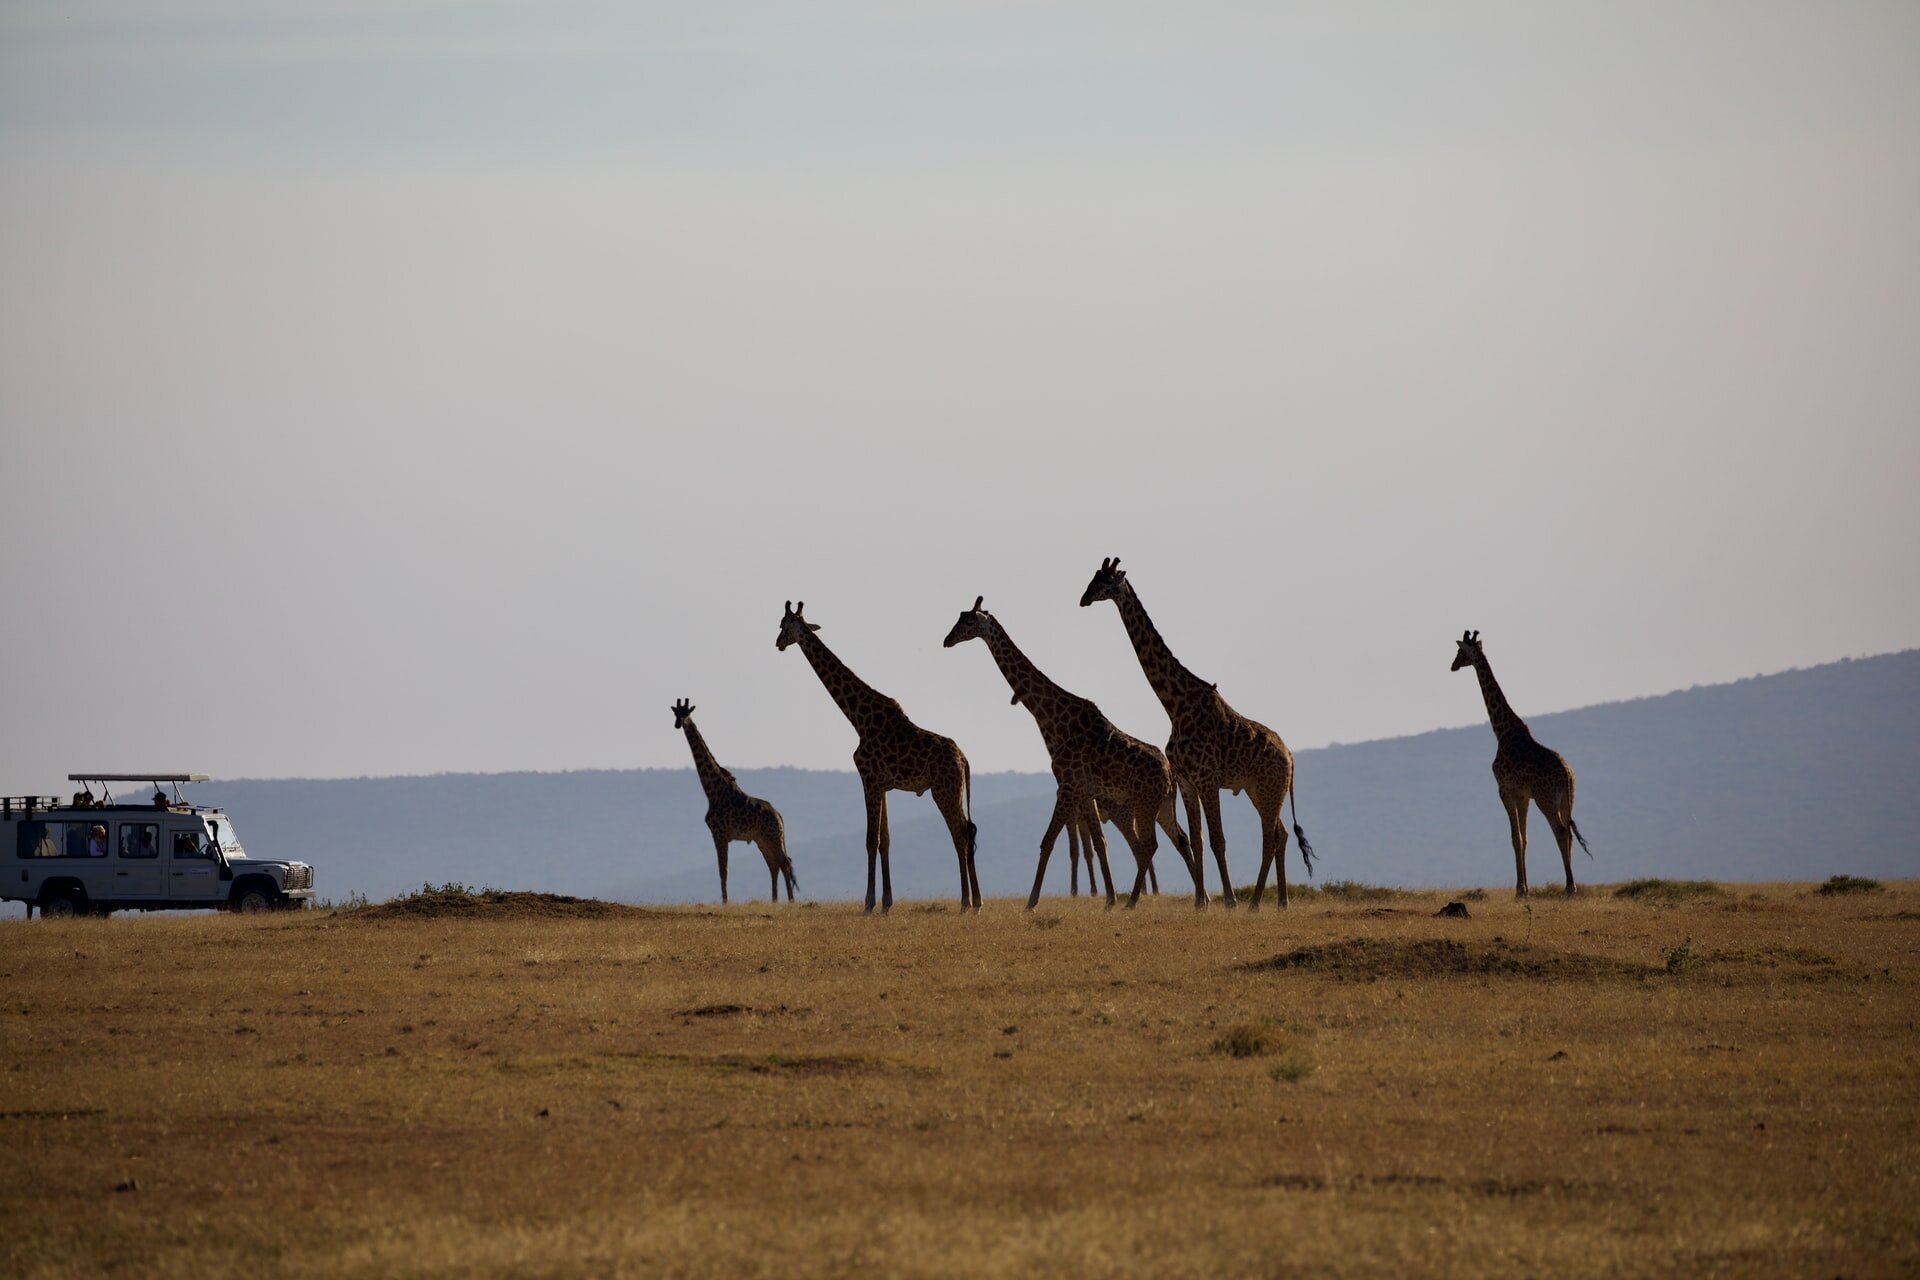 Giraffes on safari (Copy)